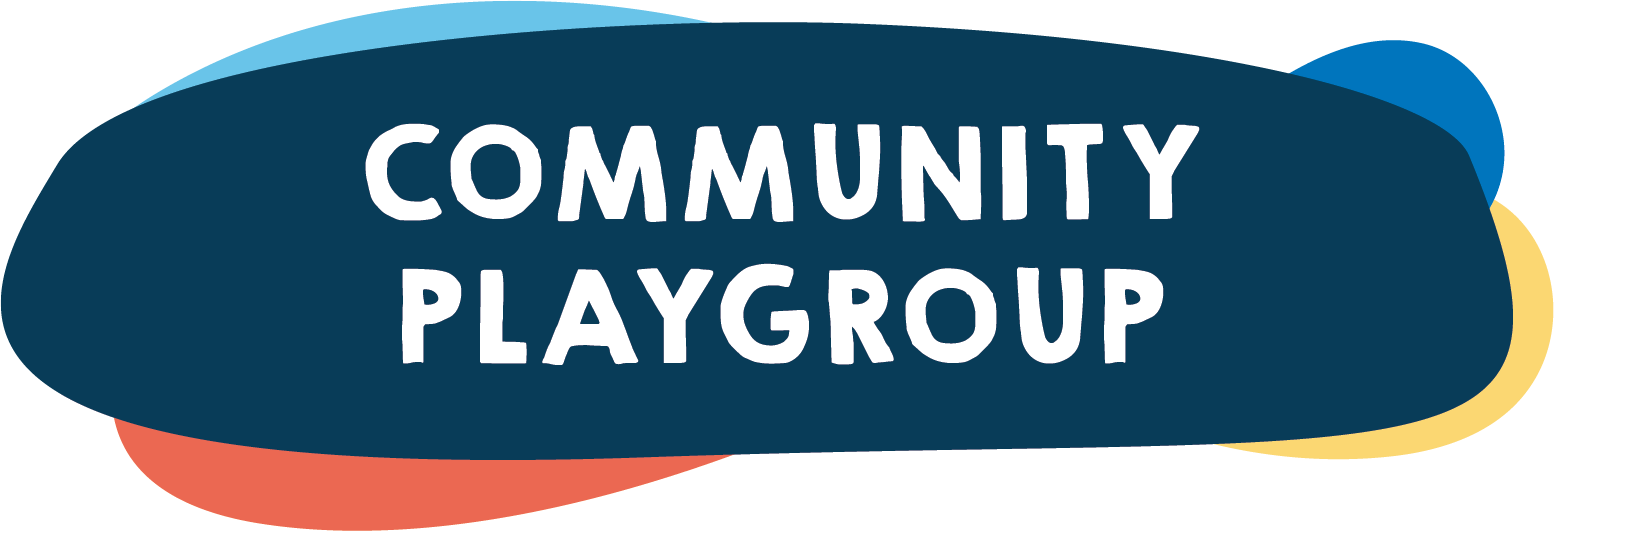 Beginners Team, community playgroup